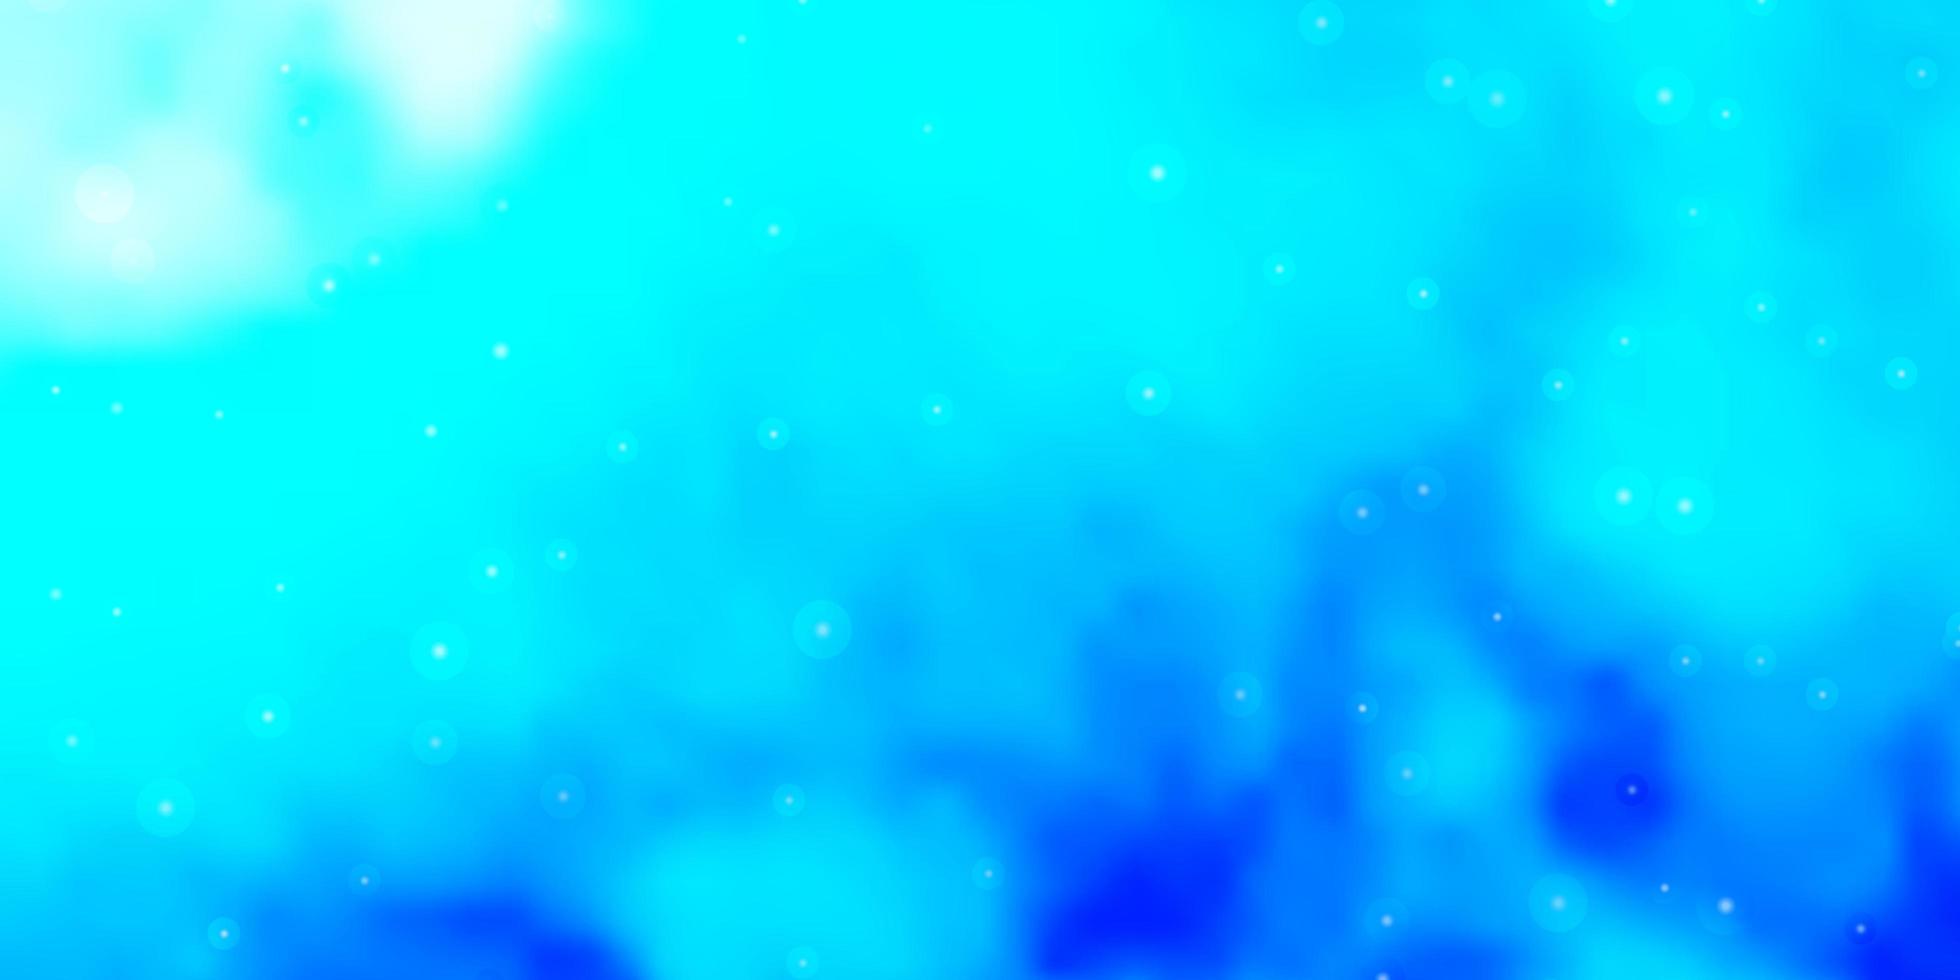 plantilla de vector azul claro con estrellas de neón